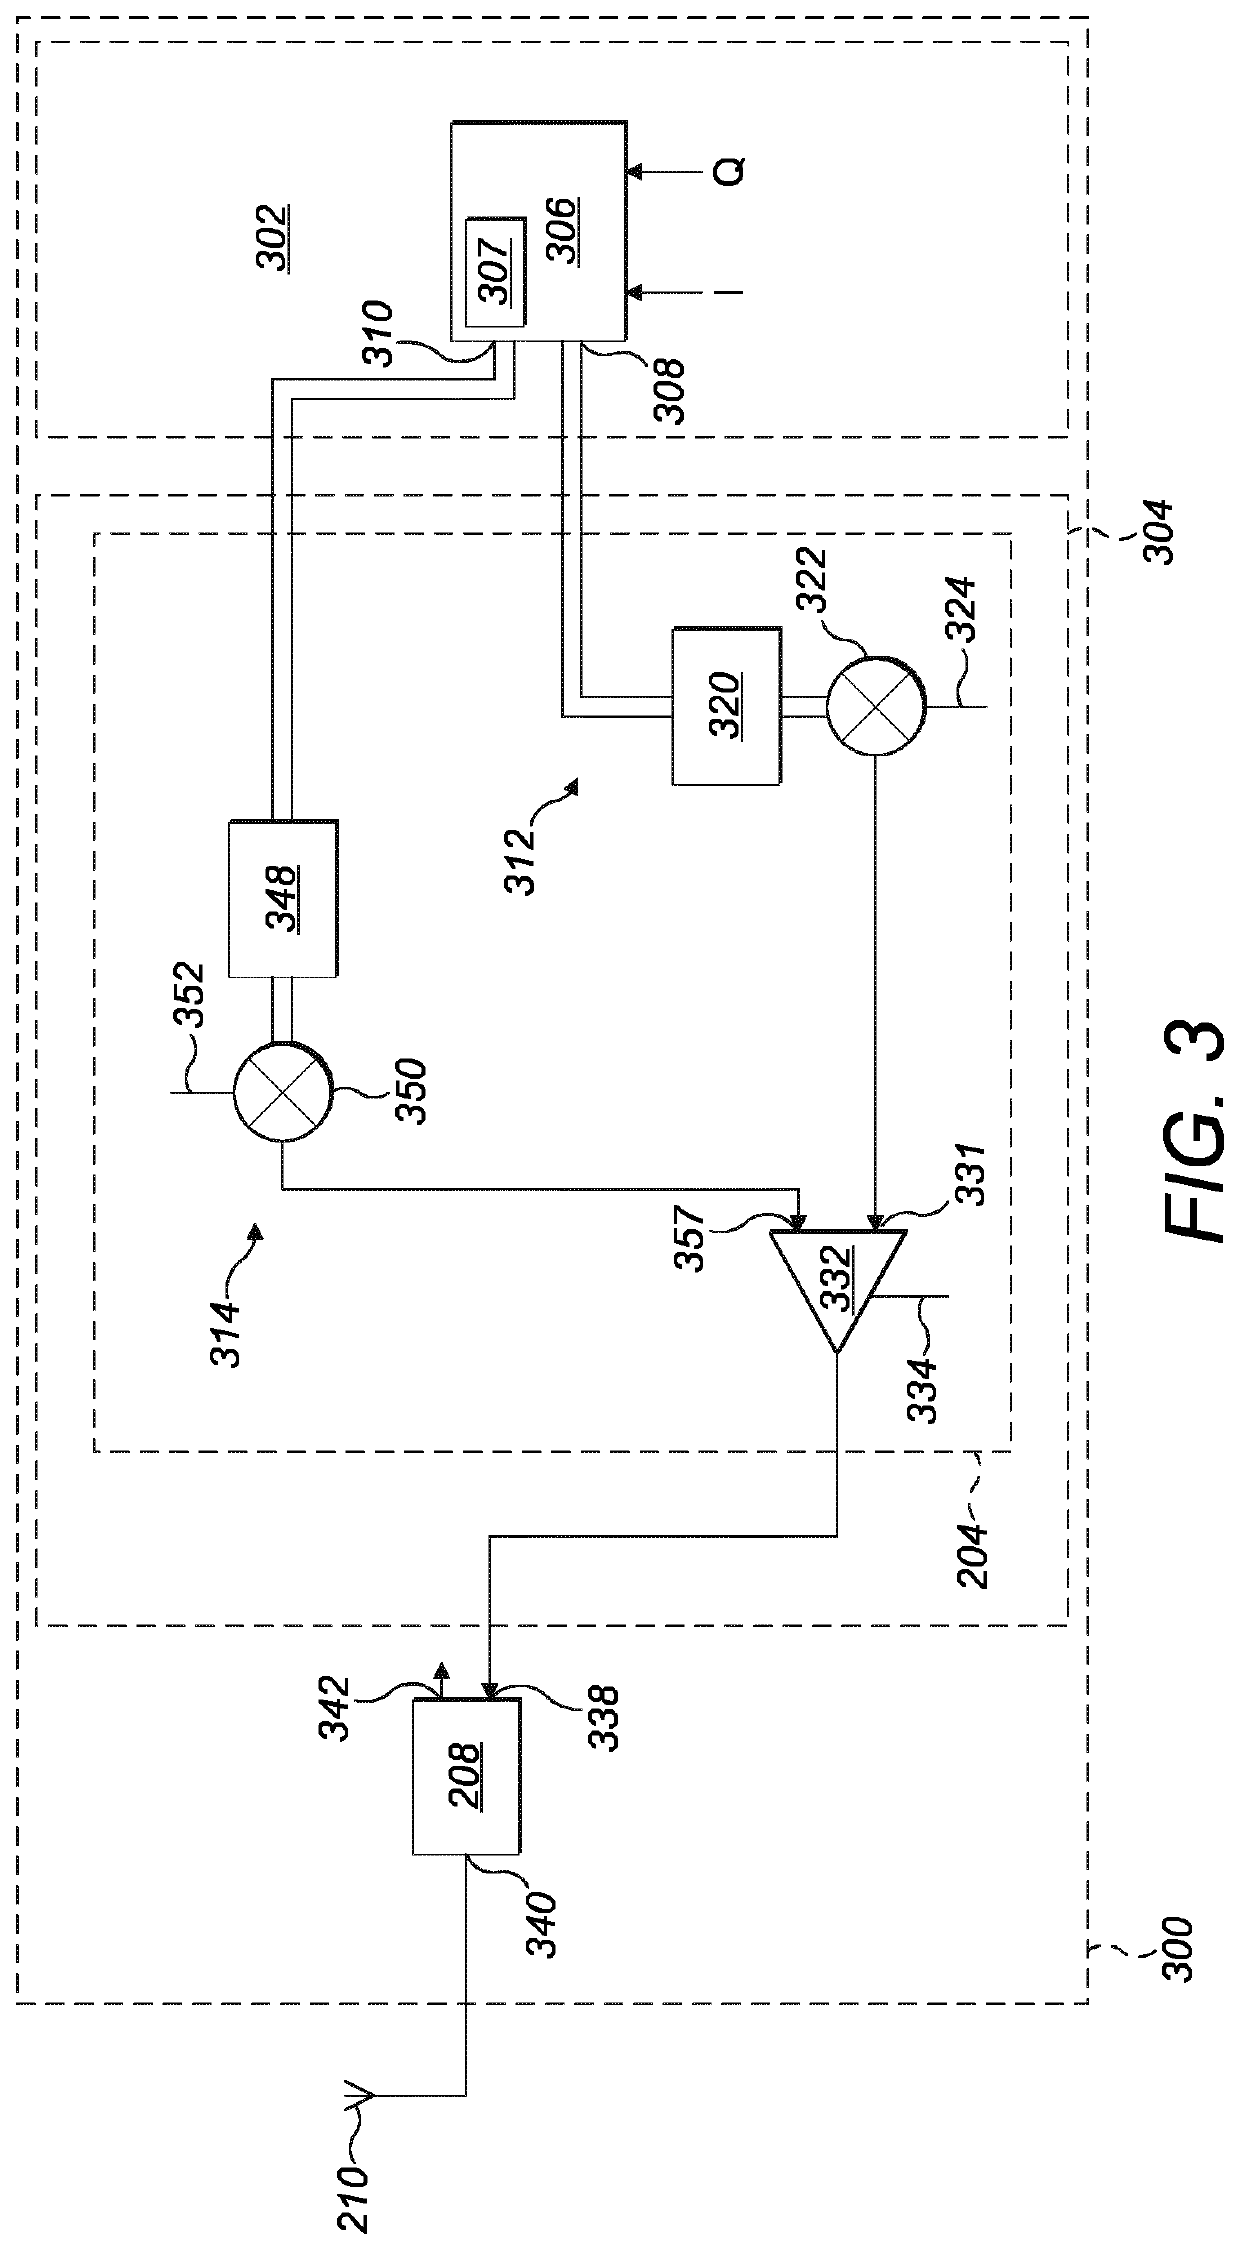 Power amplifier apparatus, envelope tracking amplifier apparatus and method of amplifying a signal